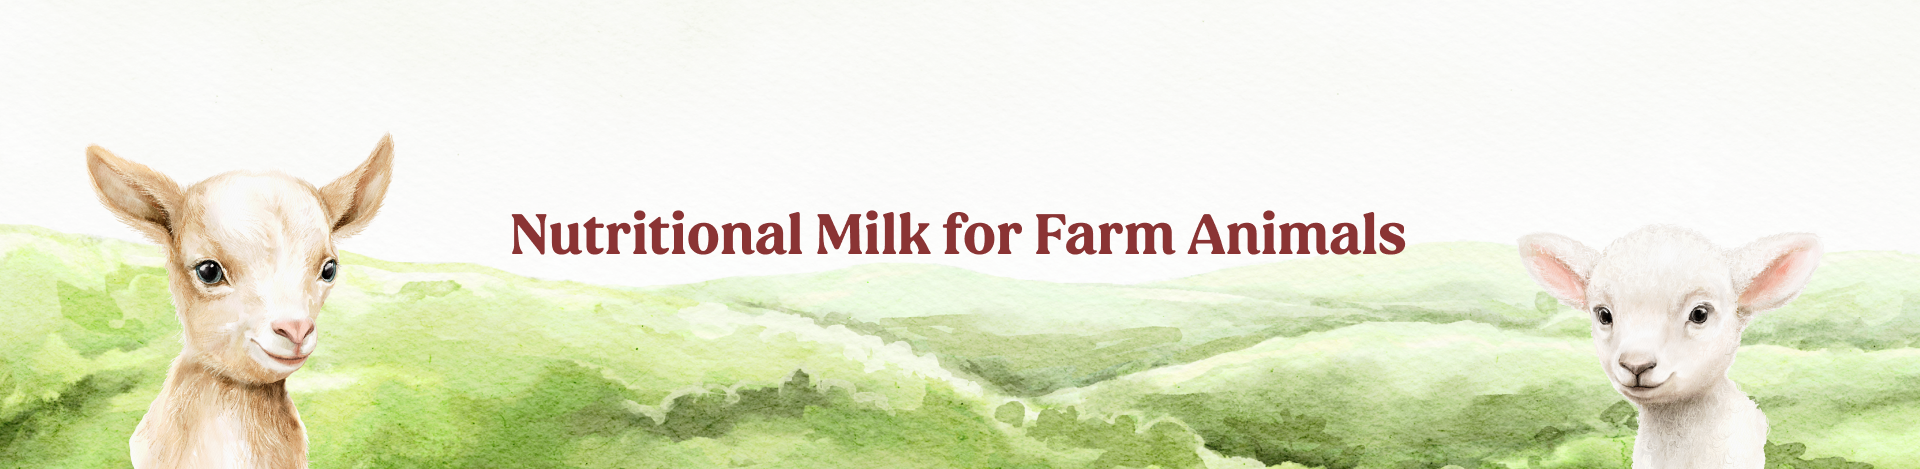 Nutritional Milk for Farm Animals Banner